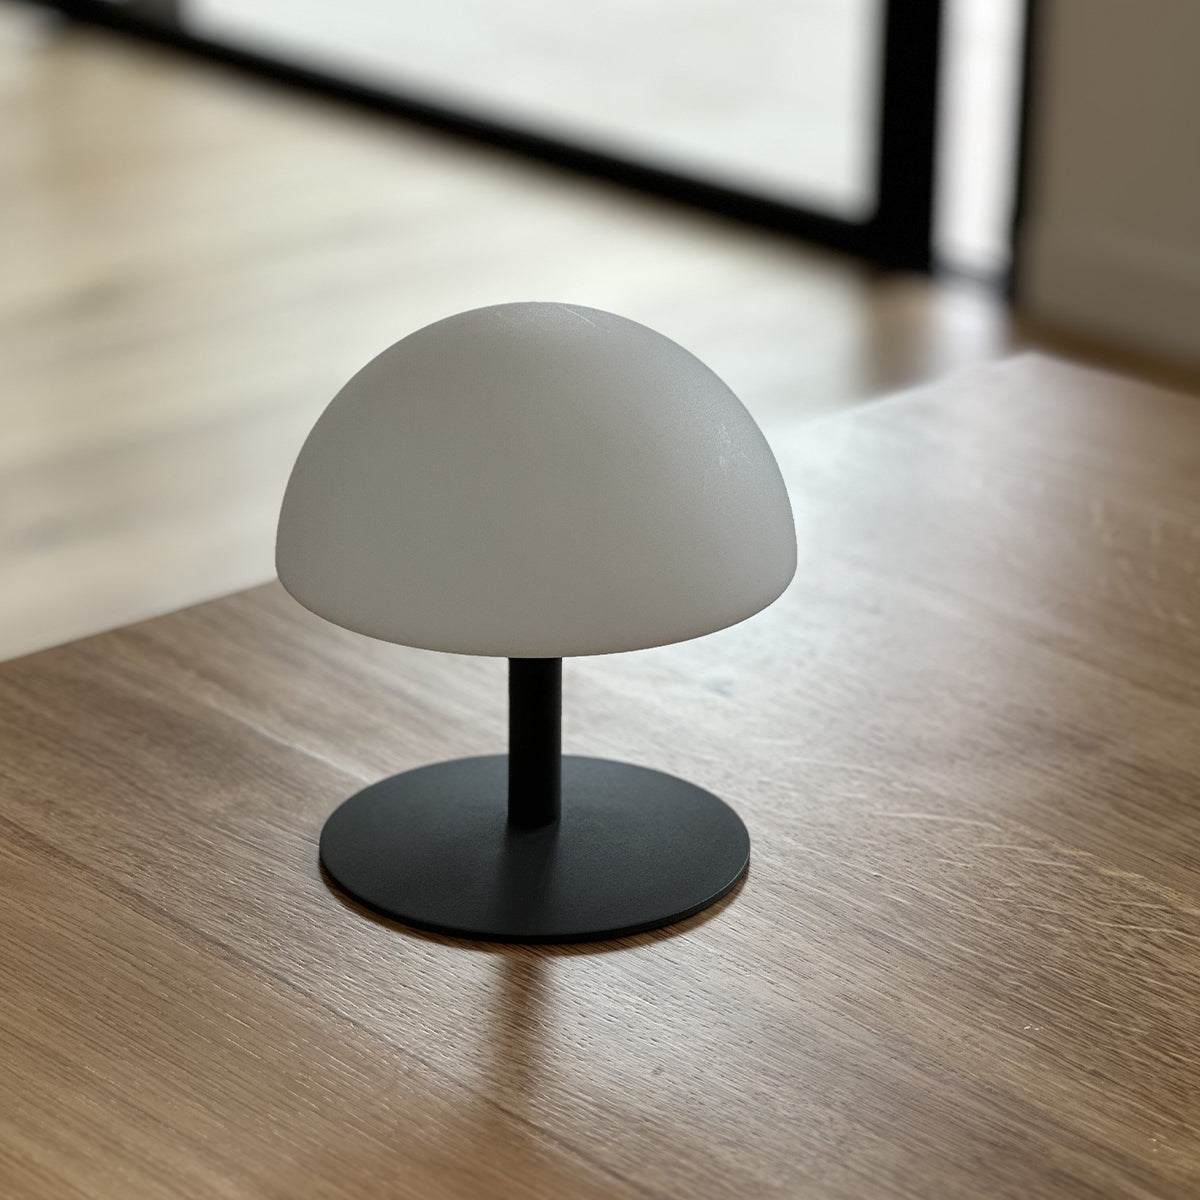 Lampe de table en bois, dimmable, lampe de chevet, lampe de